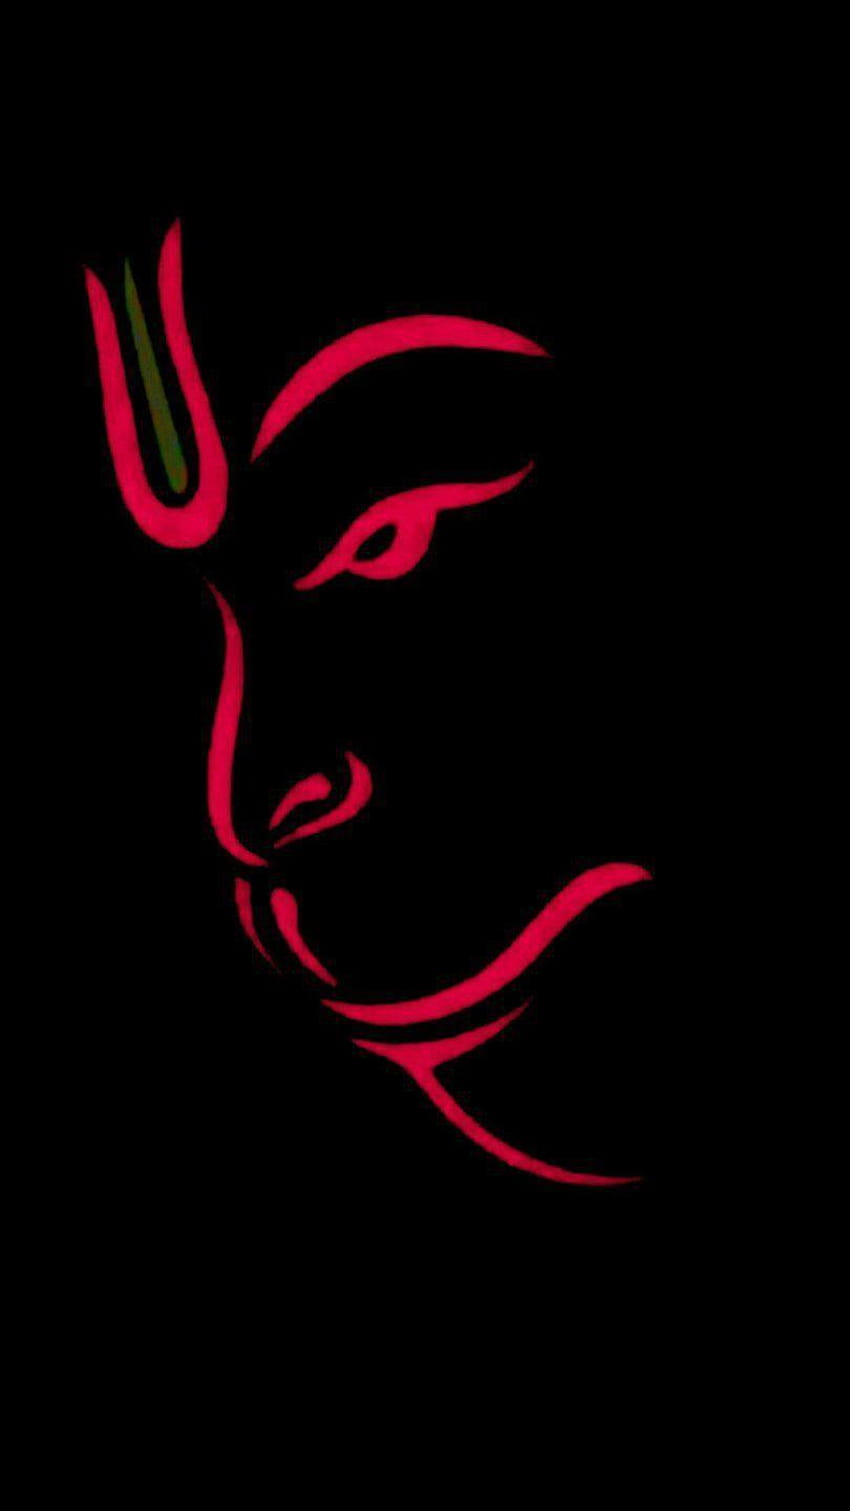 Hanuman Ji: Over 334 Royalty-Free Licensable Stock Illustrations & Drawings  | Shutterstock